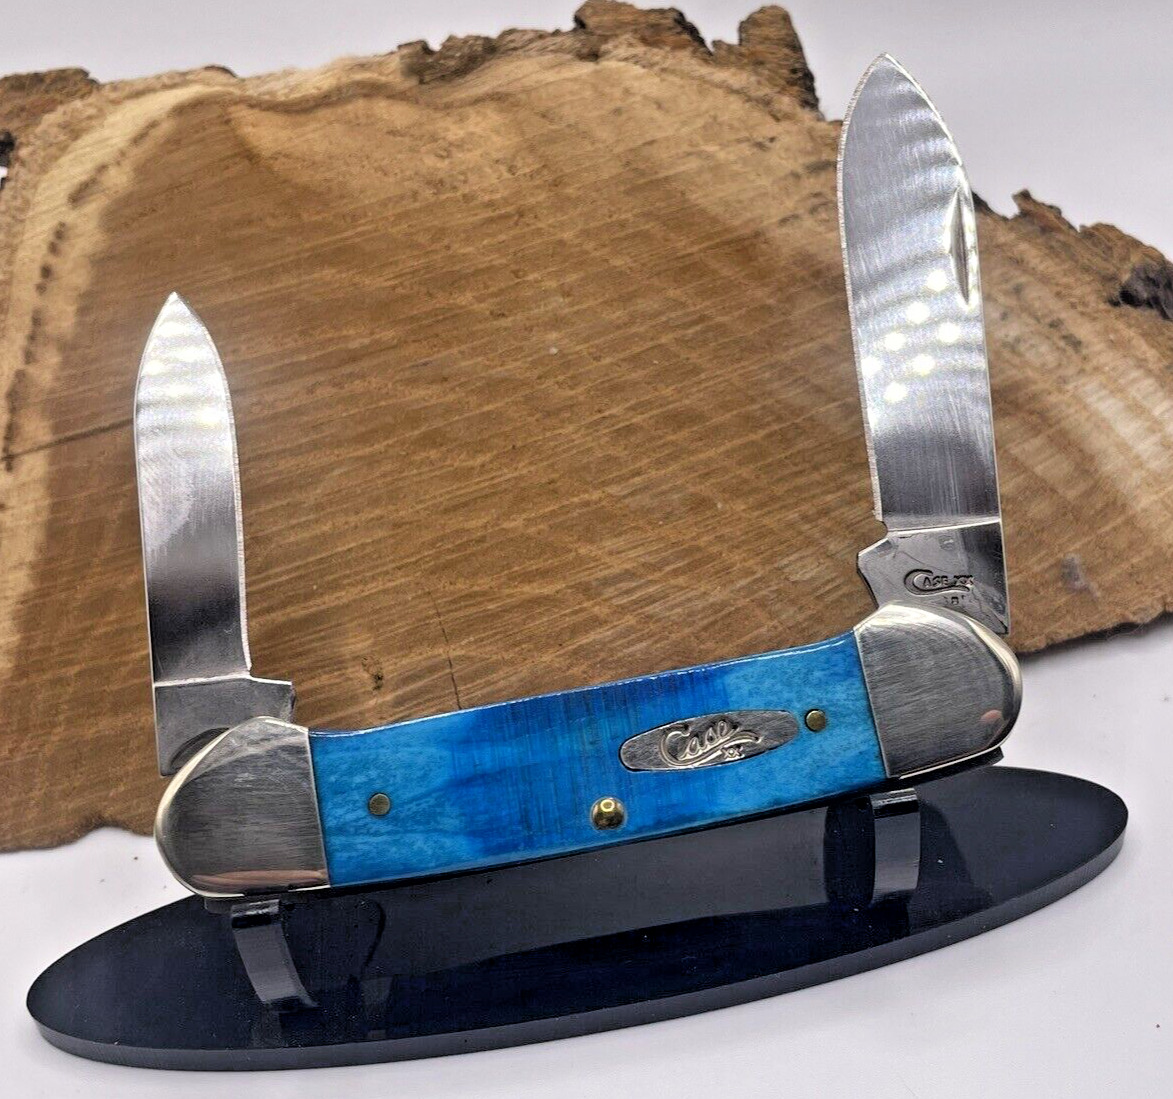 Case XX 62131 2 blade Canoe with Caribbean Blue Sawcut Bone Handles--813.24